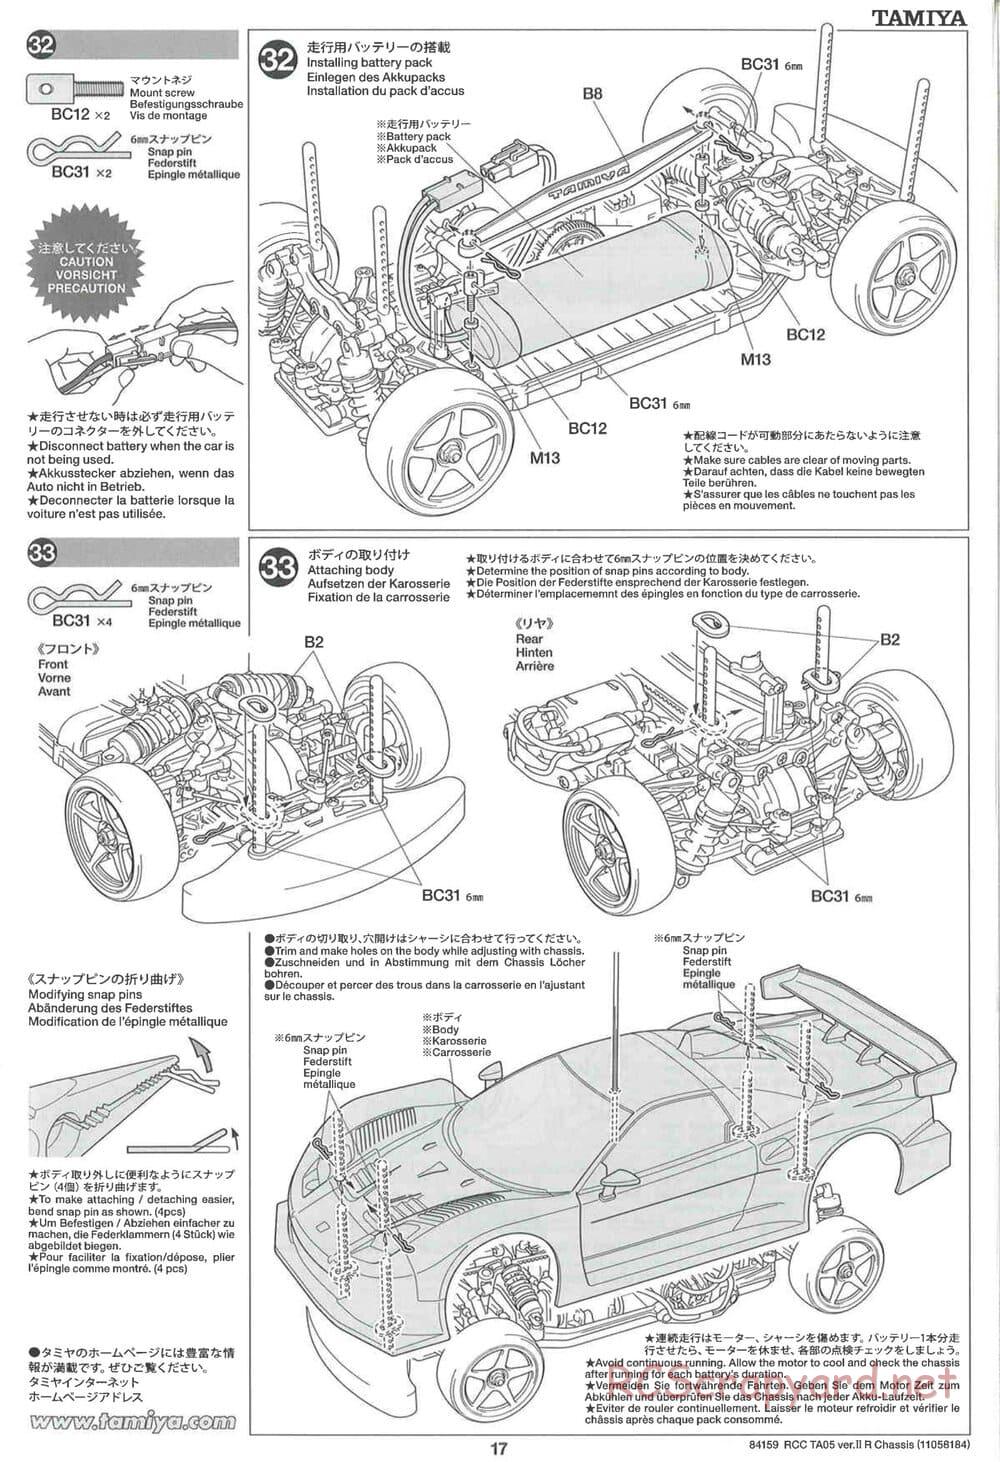 Tamiya - TA05 Ver.II R Chassis - Manual - Page 17